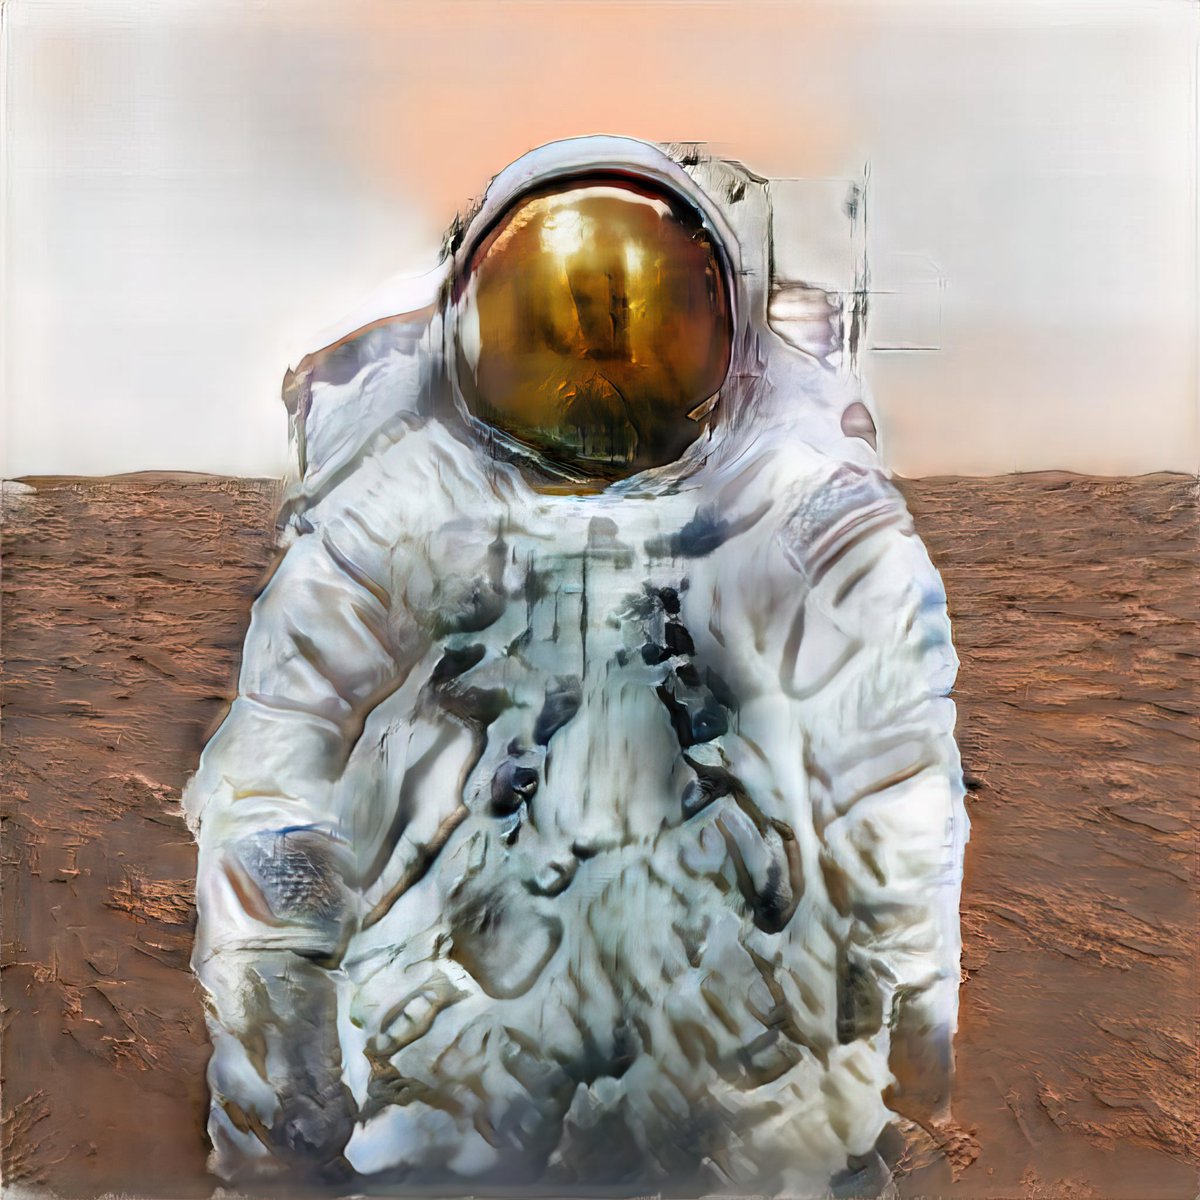 Marsonaut Pablo @pablo_alvarez_astro
.
I will be the first Human on Mars.
🧑‍🚀😀💚🚀 to the Mars.
.
@nerocosmos x soulengineer (collab).
.
#astronaut #marsexploration #marslanding
#cosmonaut #spaceman #mars #redplanet
#marsmission #marsexpedition #taikonaut
#collector #editions